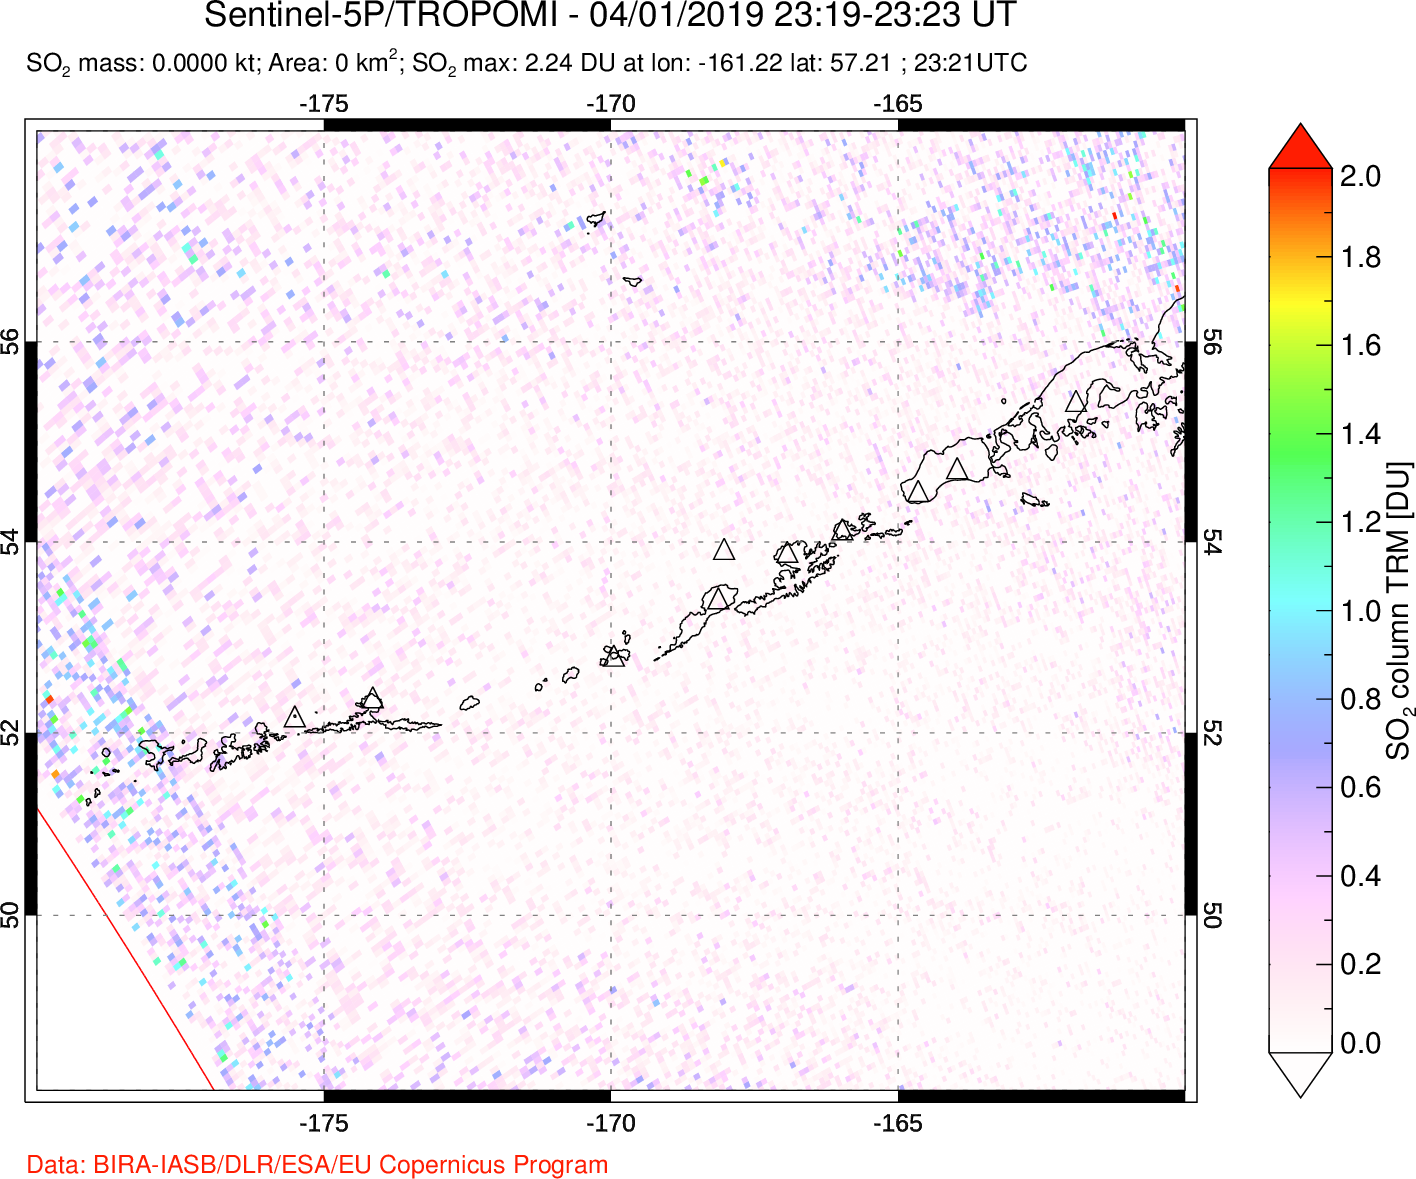 A sulfur dioxide image over Aleutian Islands, Alaska, USA on Apr 01, 2019.